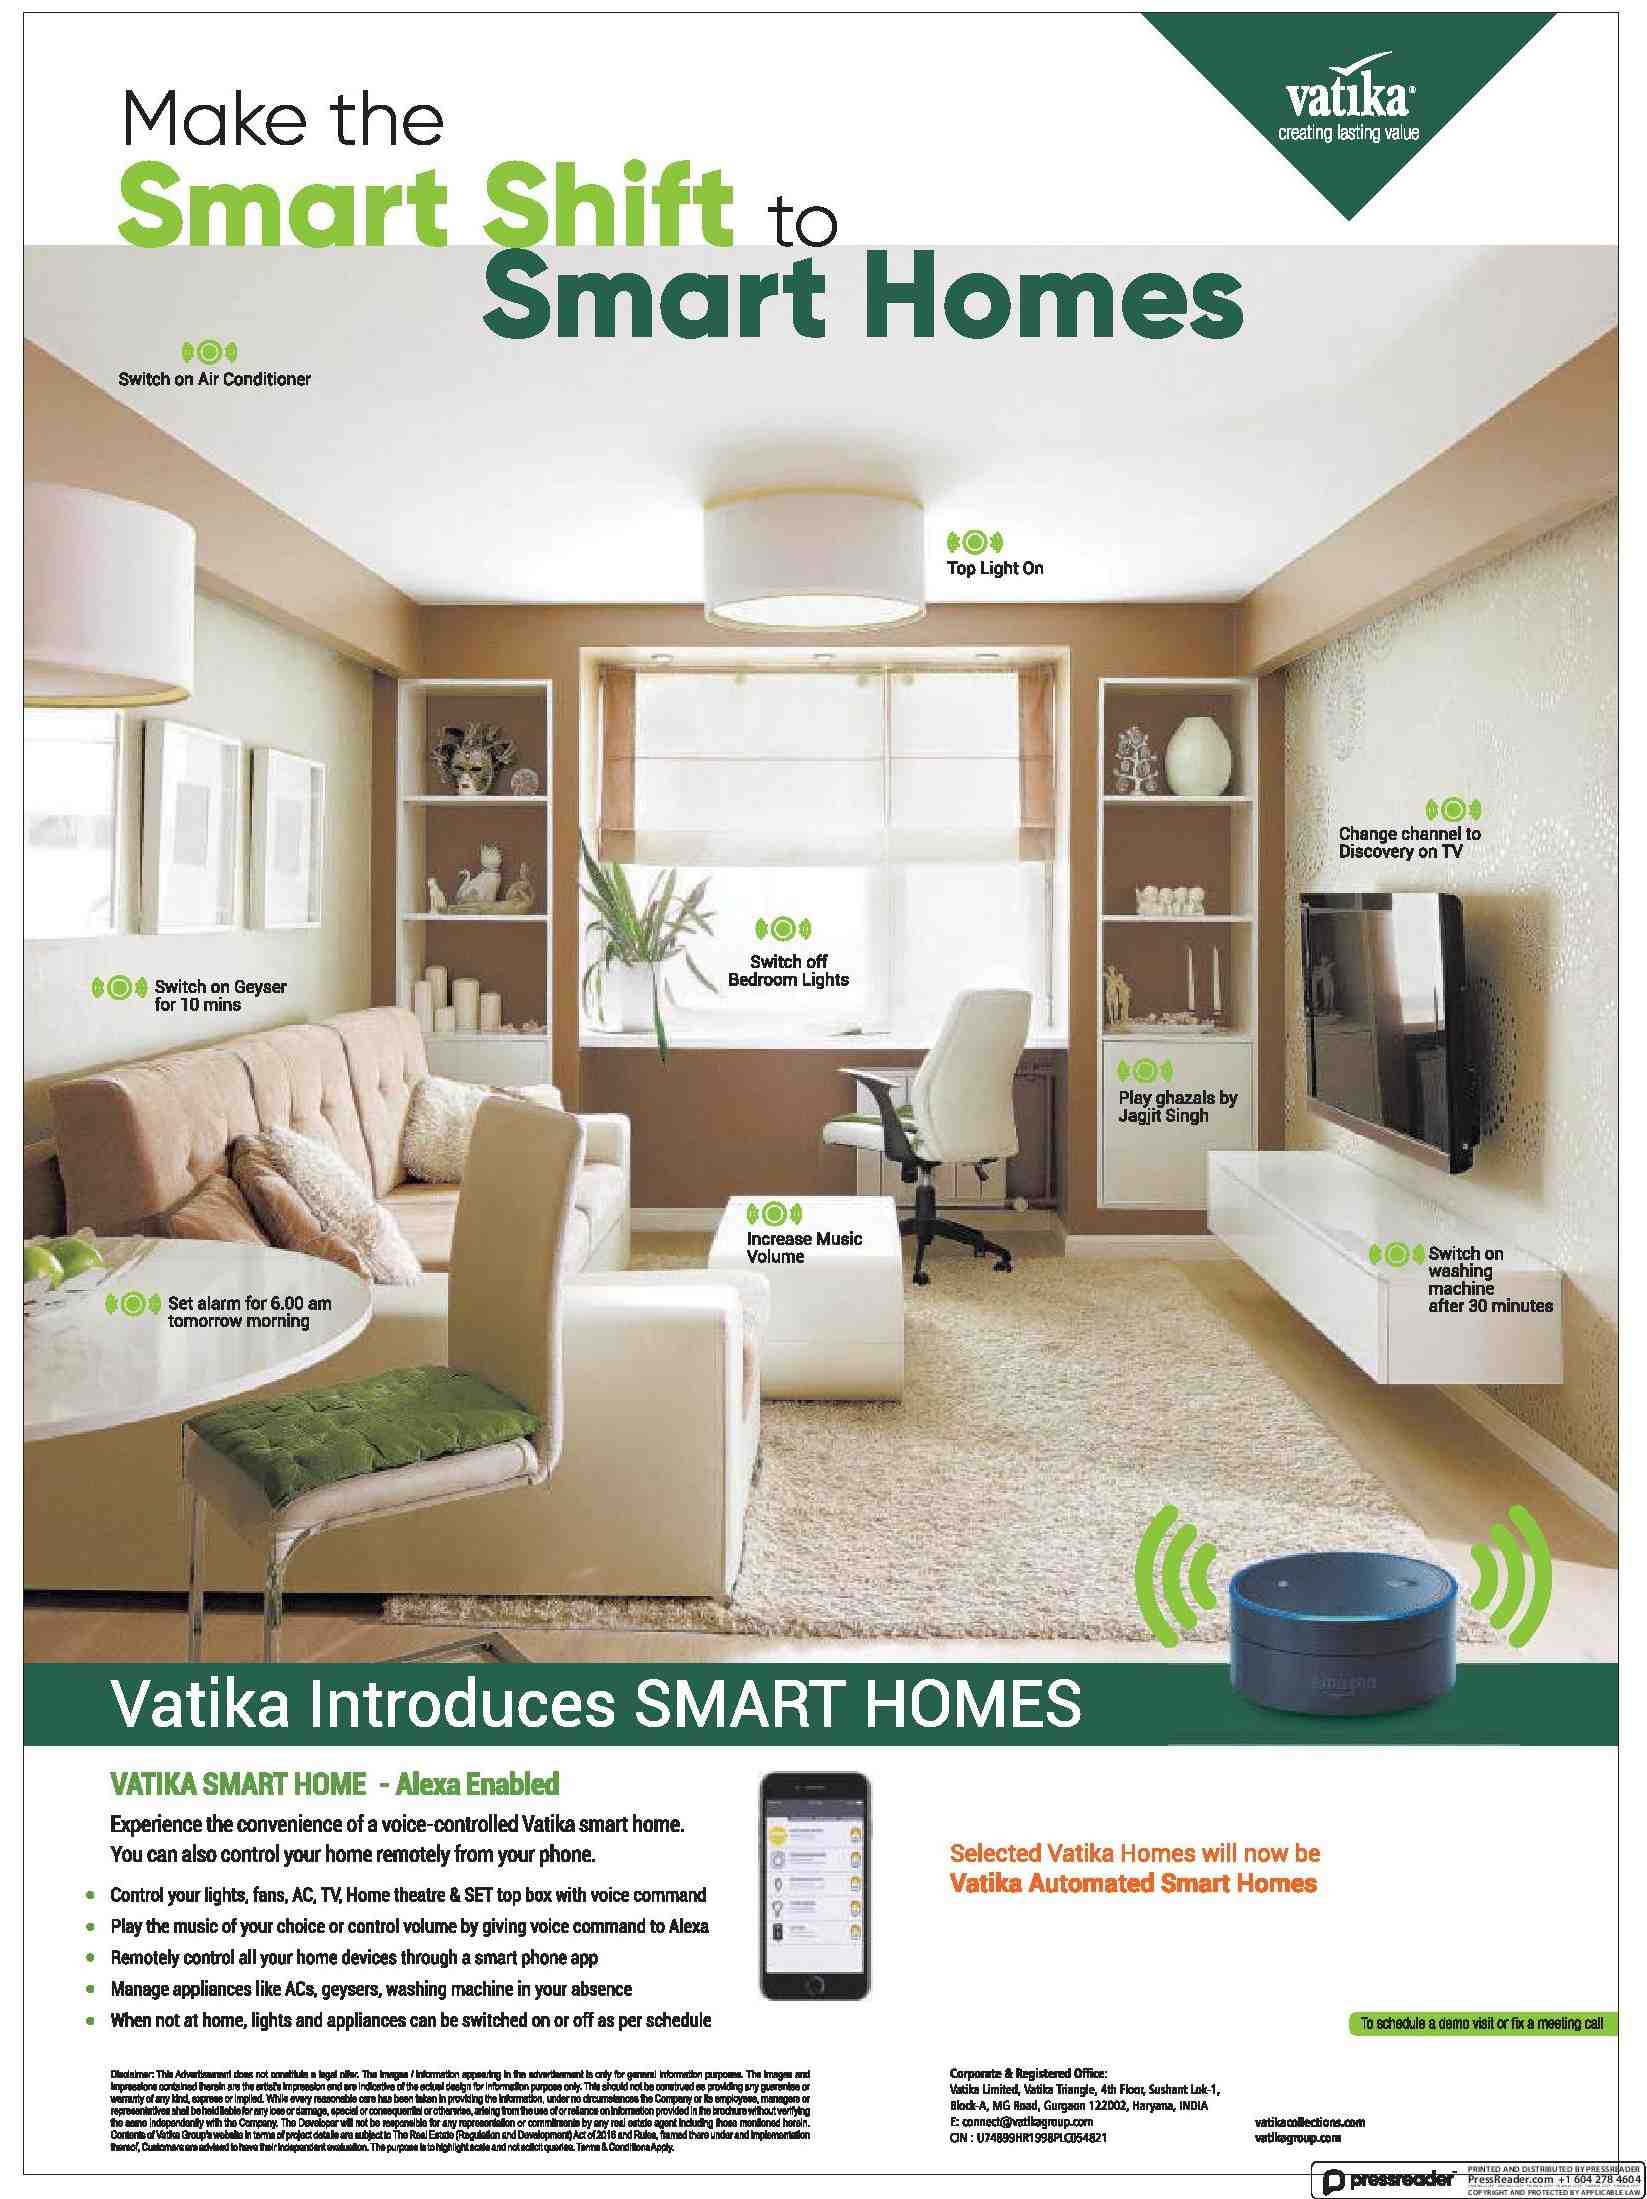 Vatika introduces smart homes in Gurgaon Update